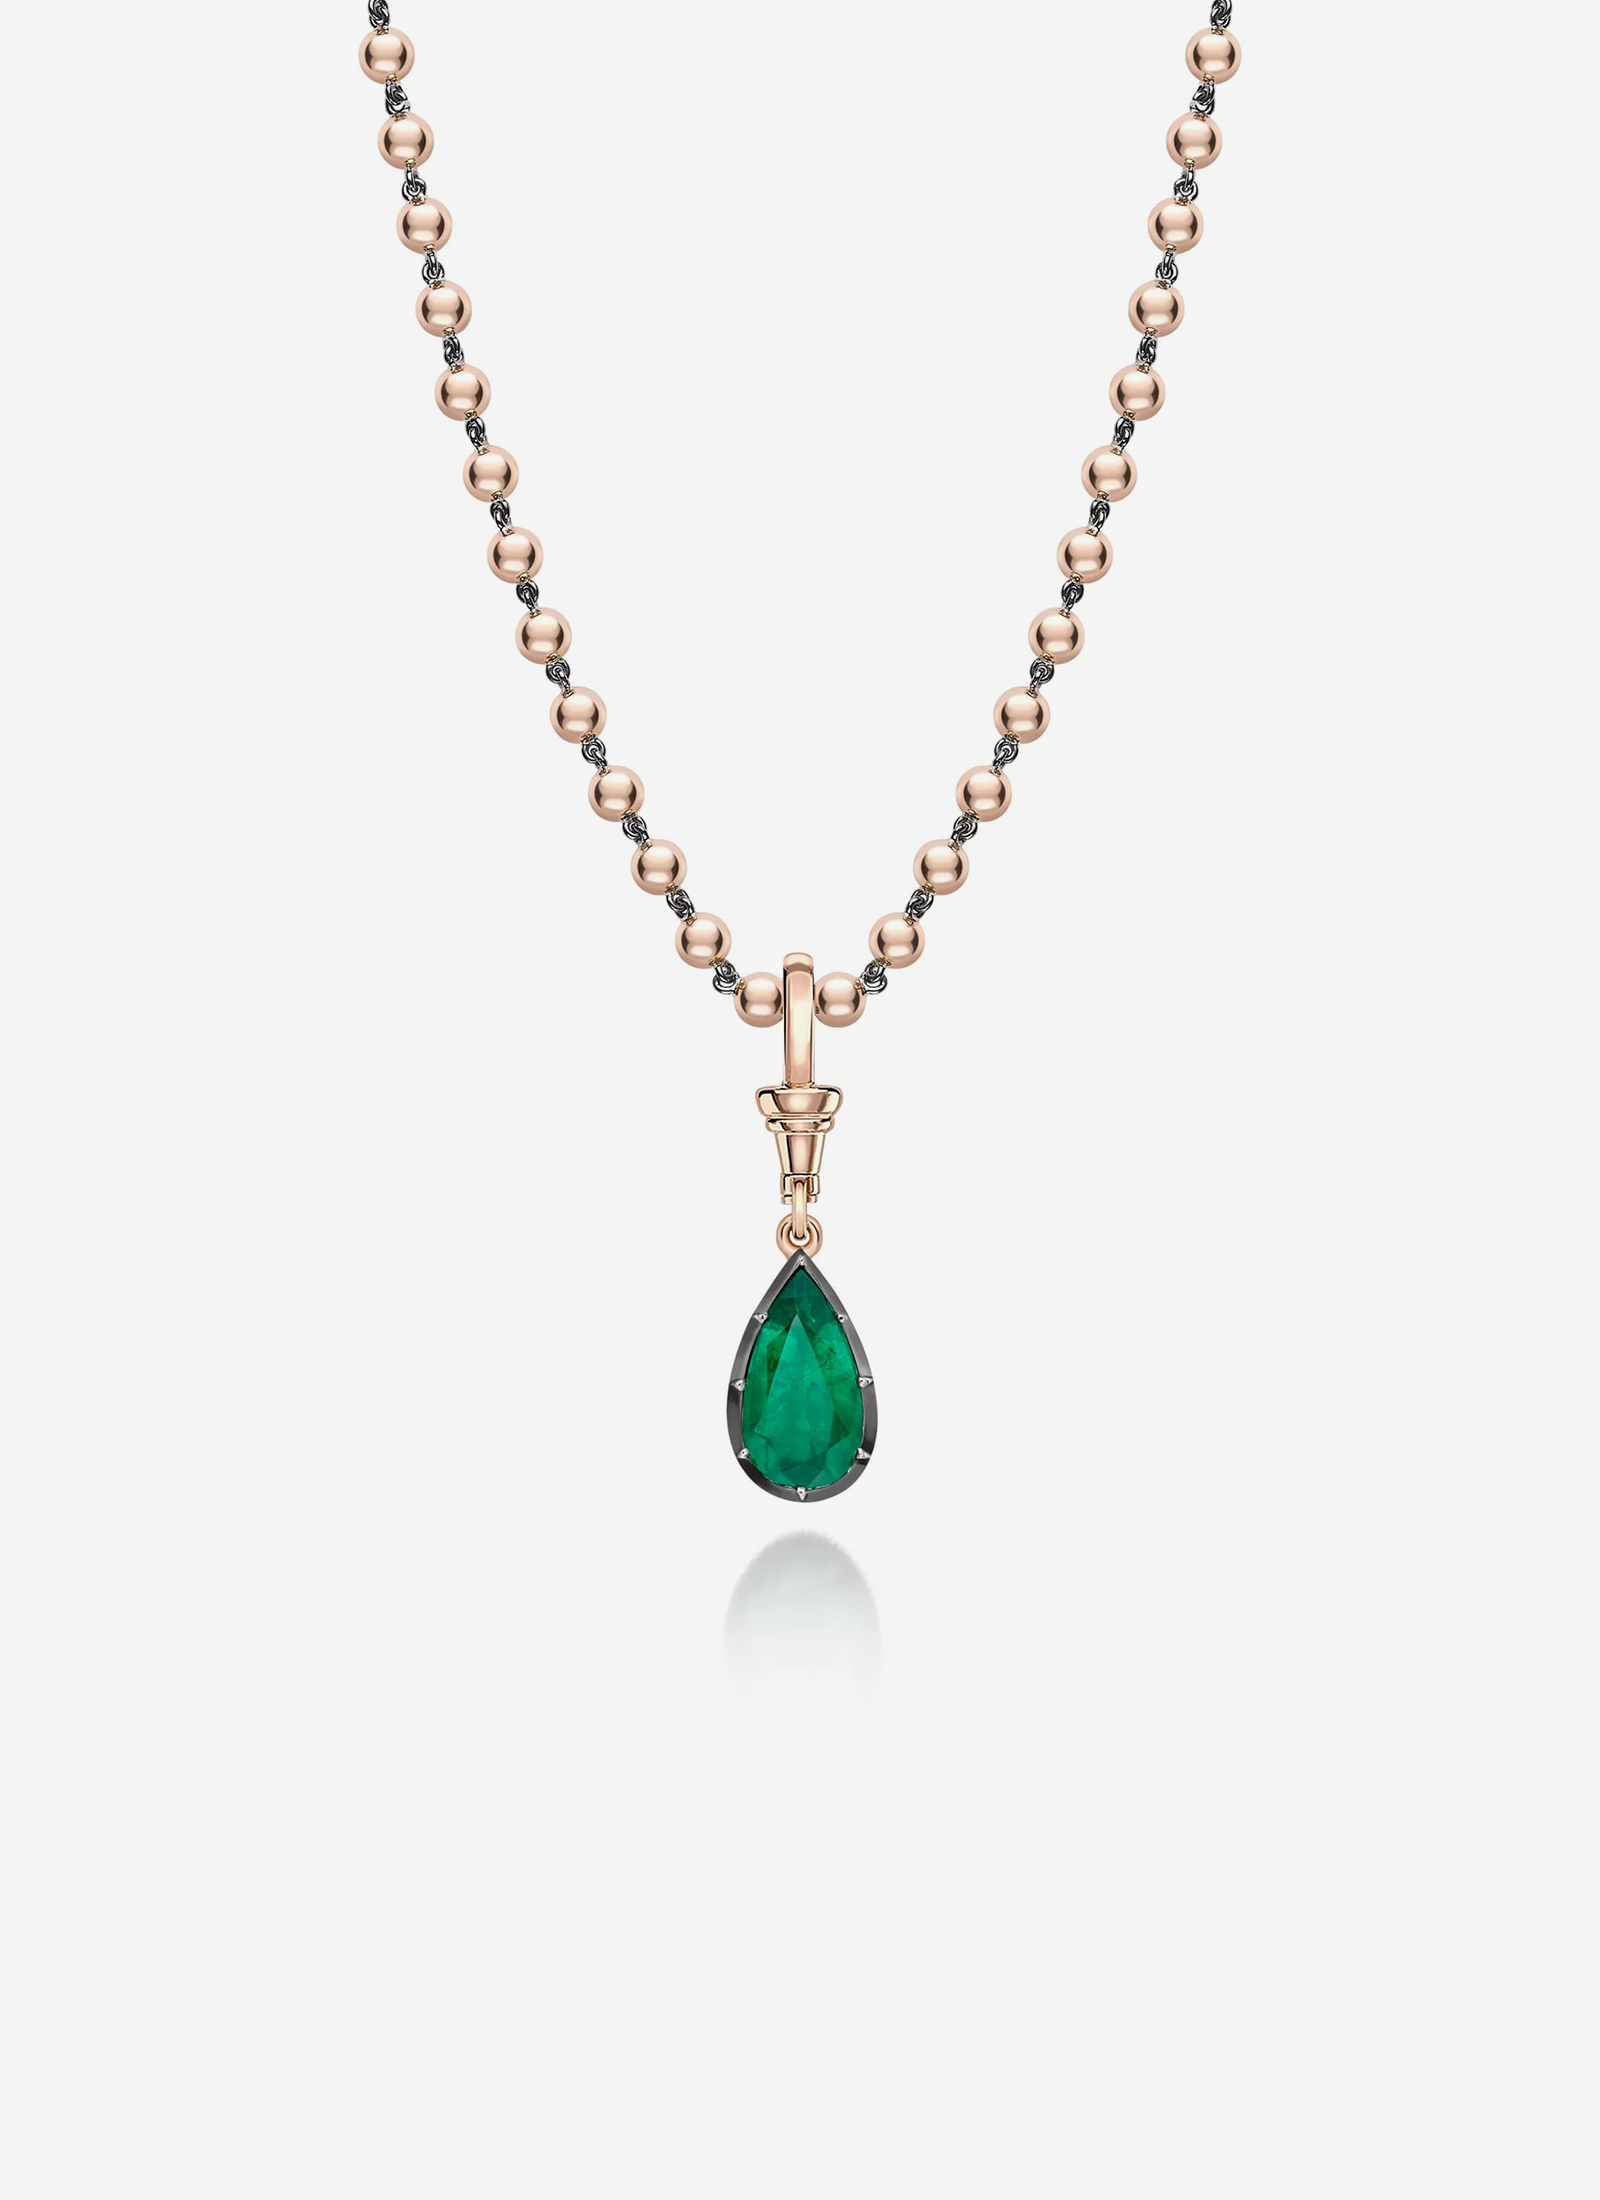 Ball n Chain Pendant - Emerald Pear Shaped 2.17ct